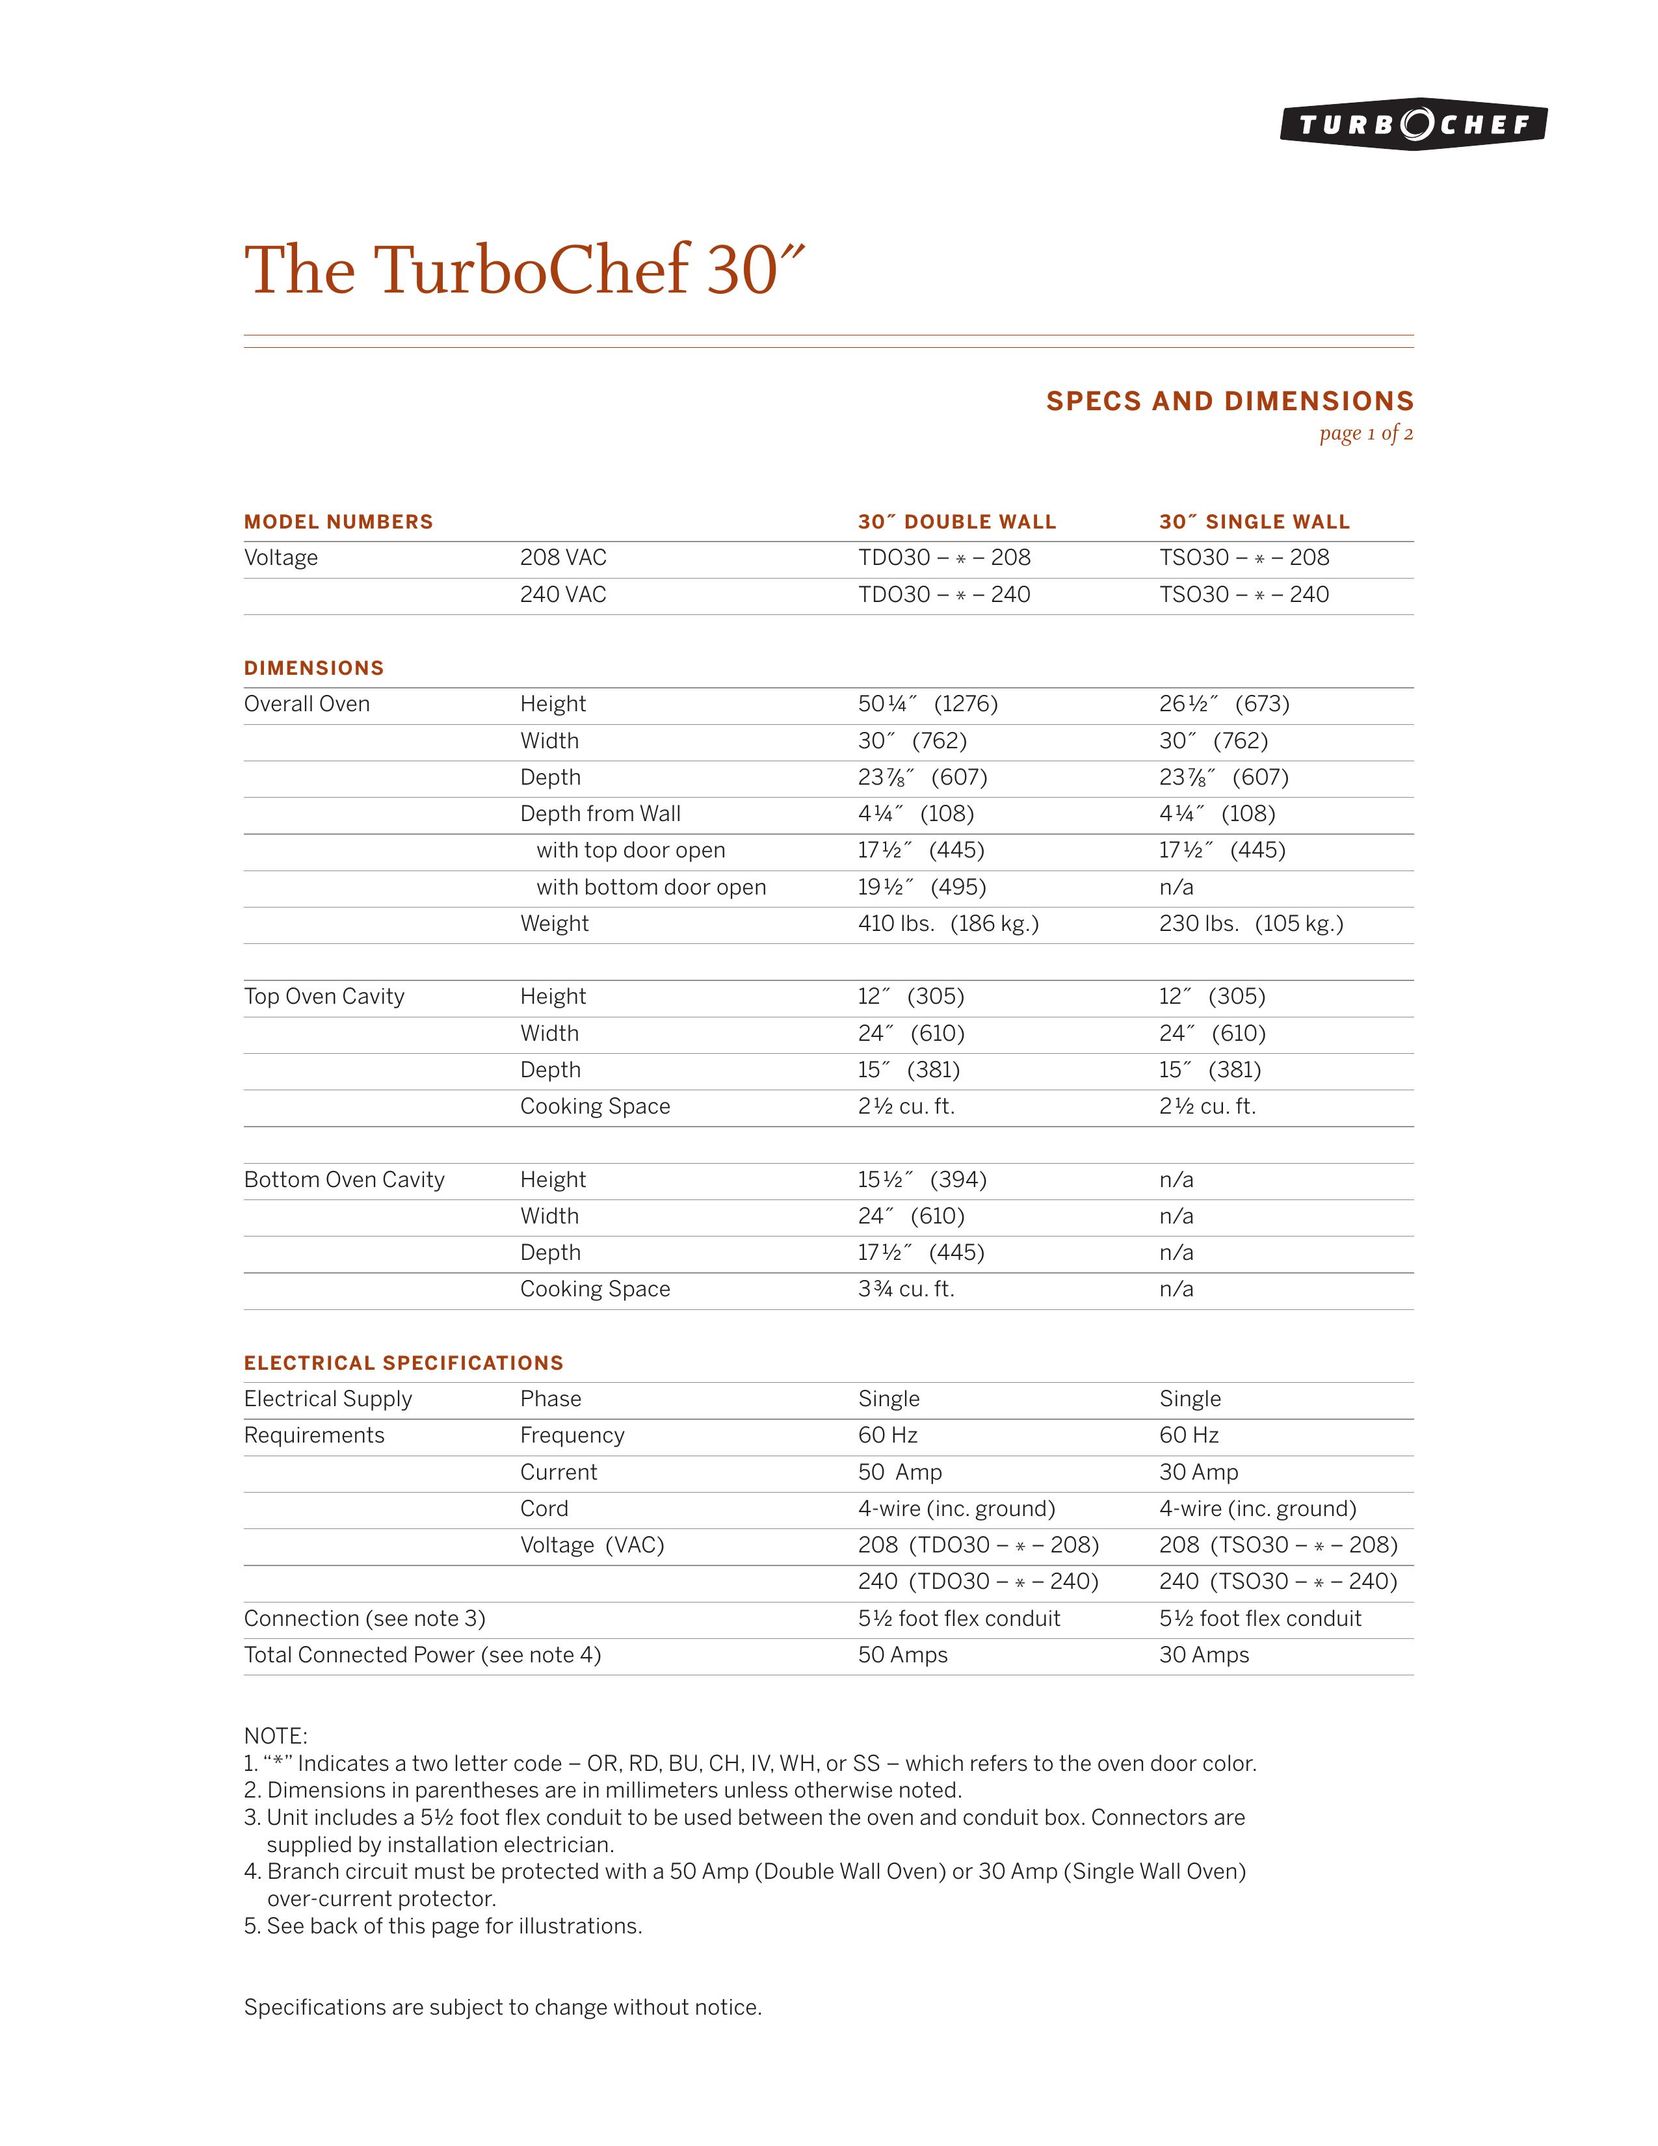 Turbo Chef Technologies 30 Single Wall Oven User Manual